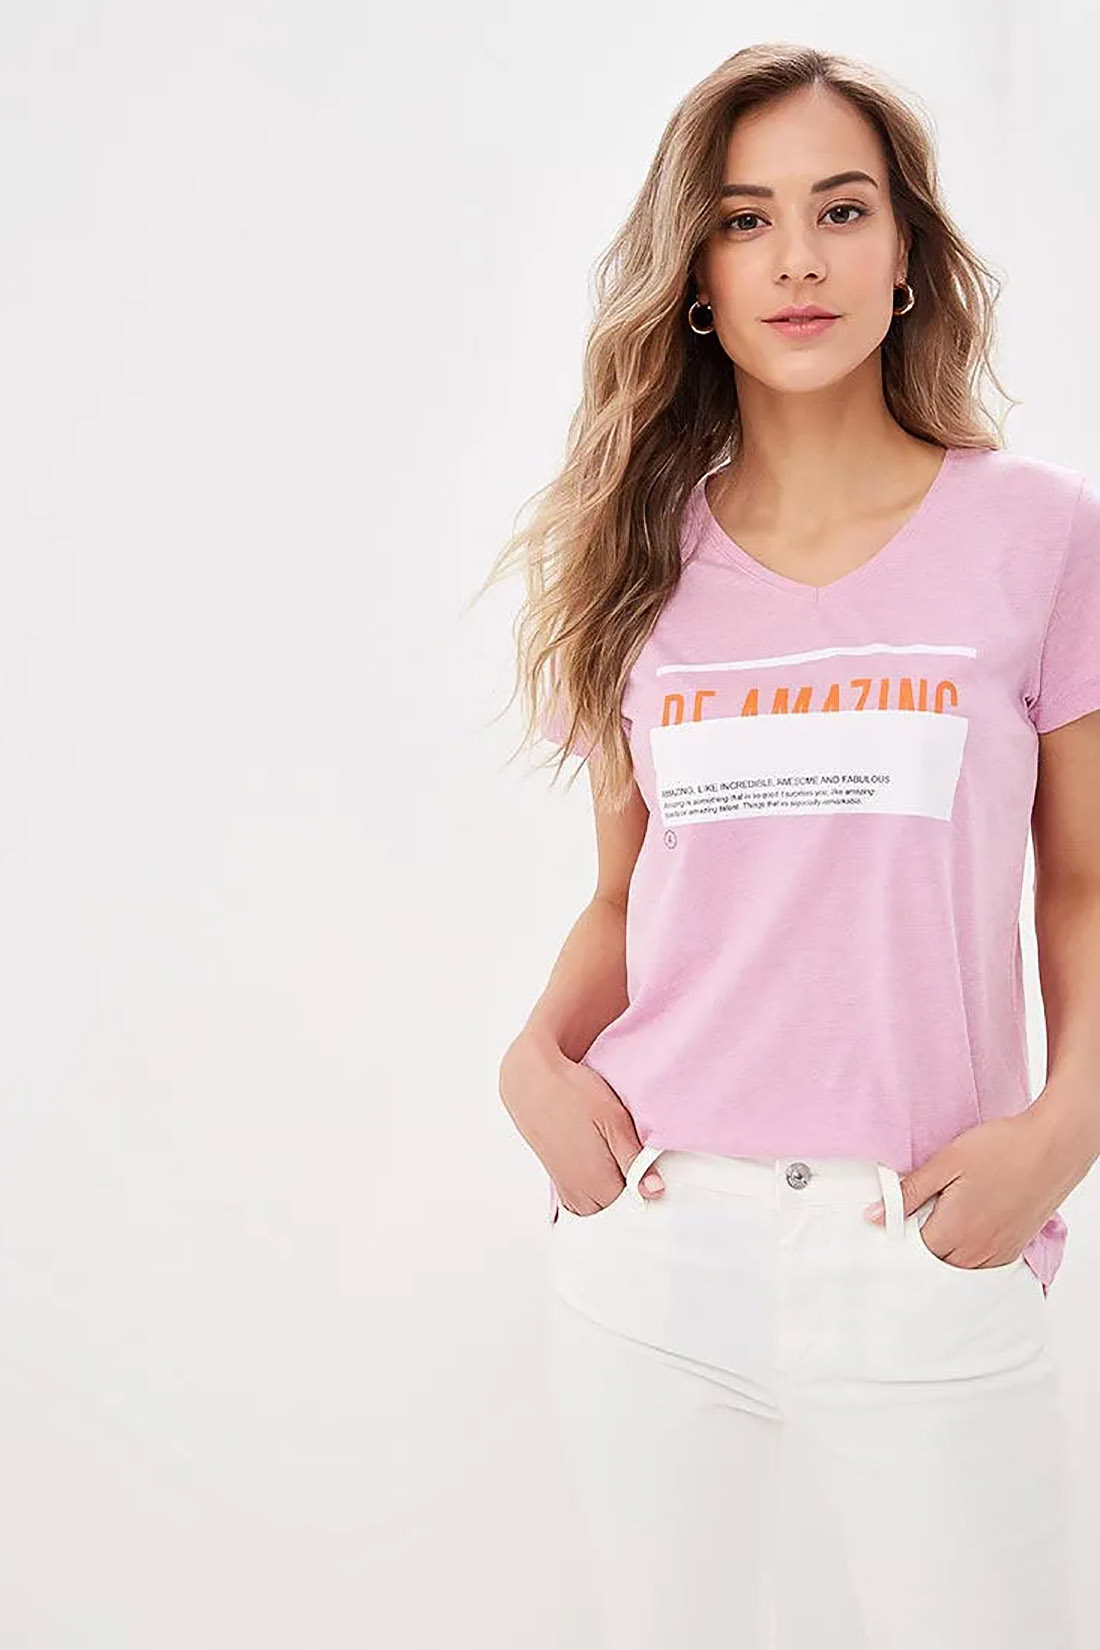 Розовая футболка с принтом (арт. baon B239079), размер L, цвет розовый Розовая футболка с принтом (арт. baon B239079) - фото 1